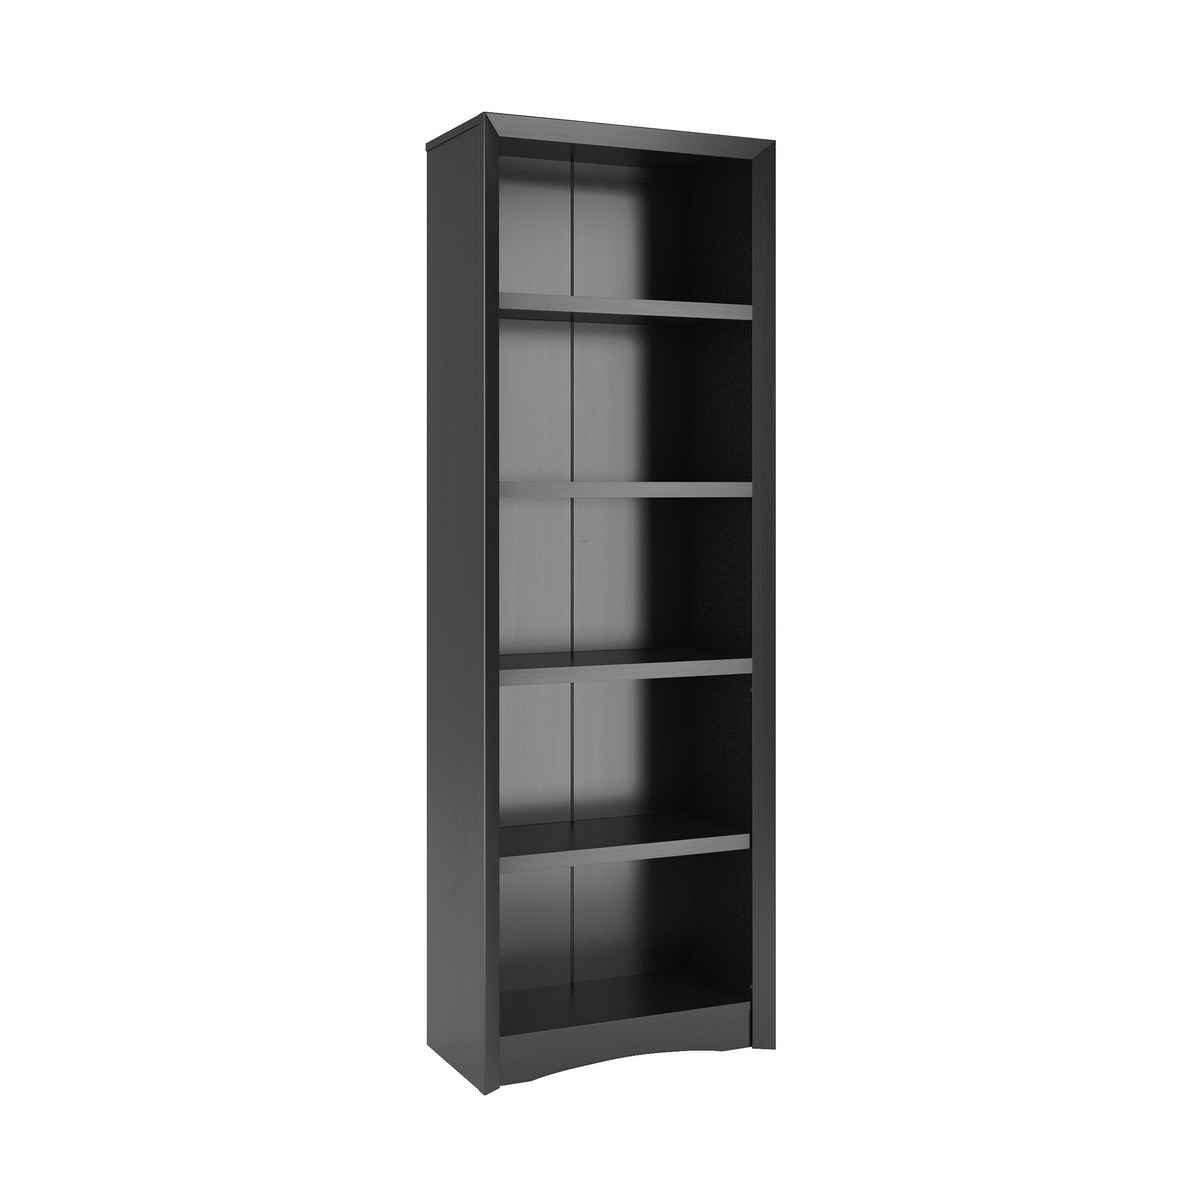 Corliving Lsa-809-s Quadra 71" Tall Bookcase In Black Faux Woodgrain Finish